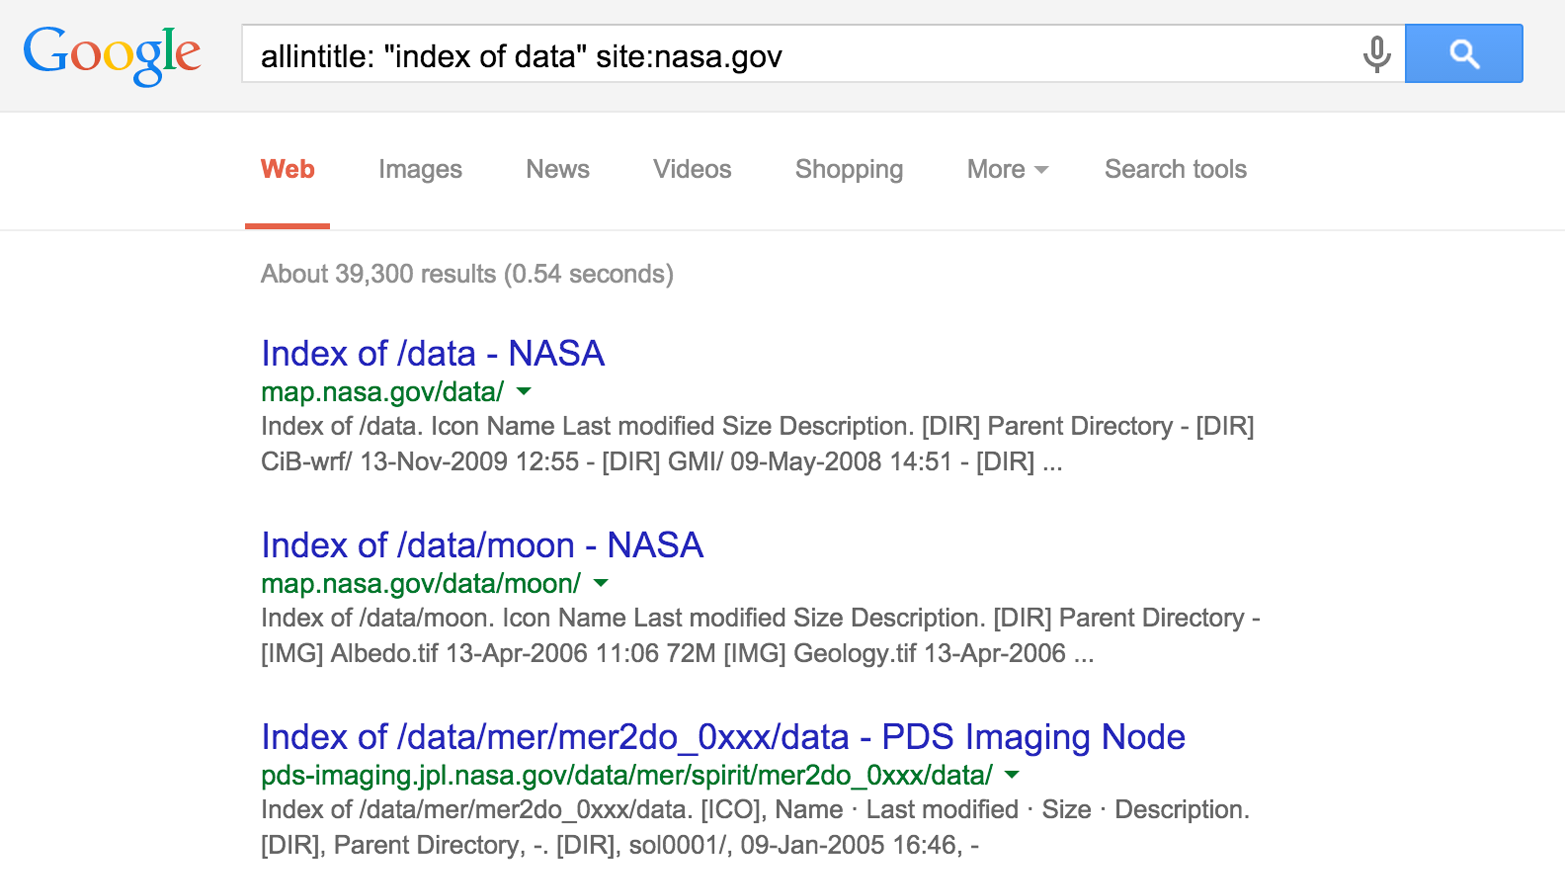 Identifying indexed web directories under nasa.gov